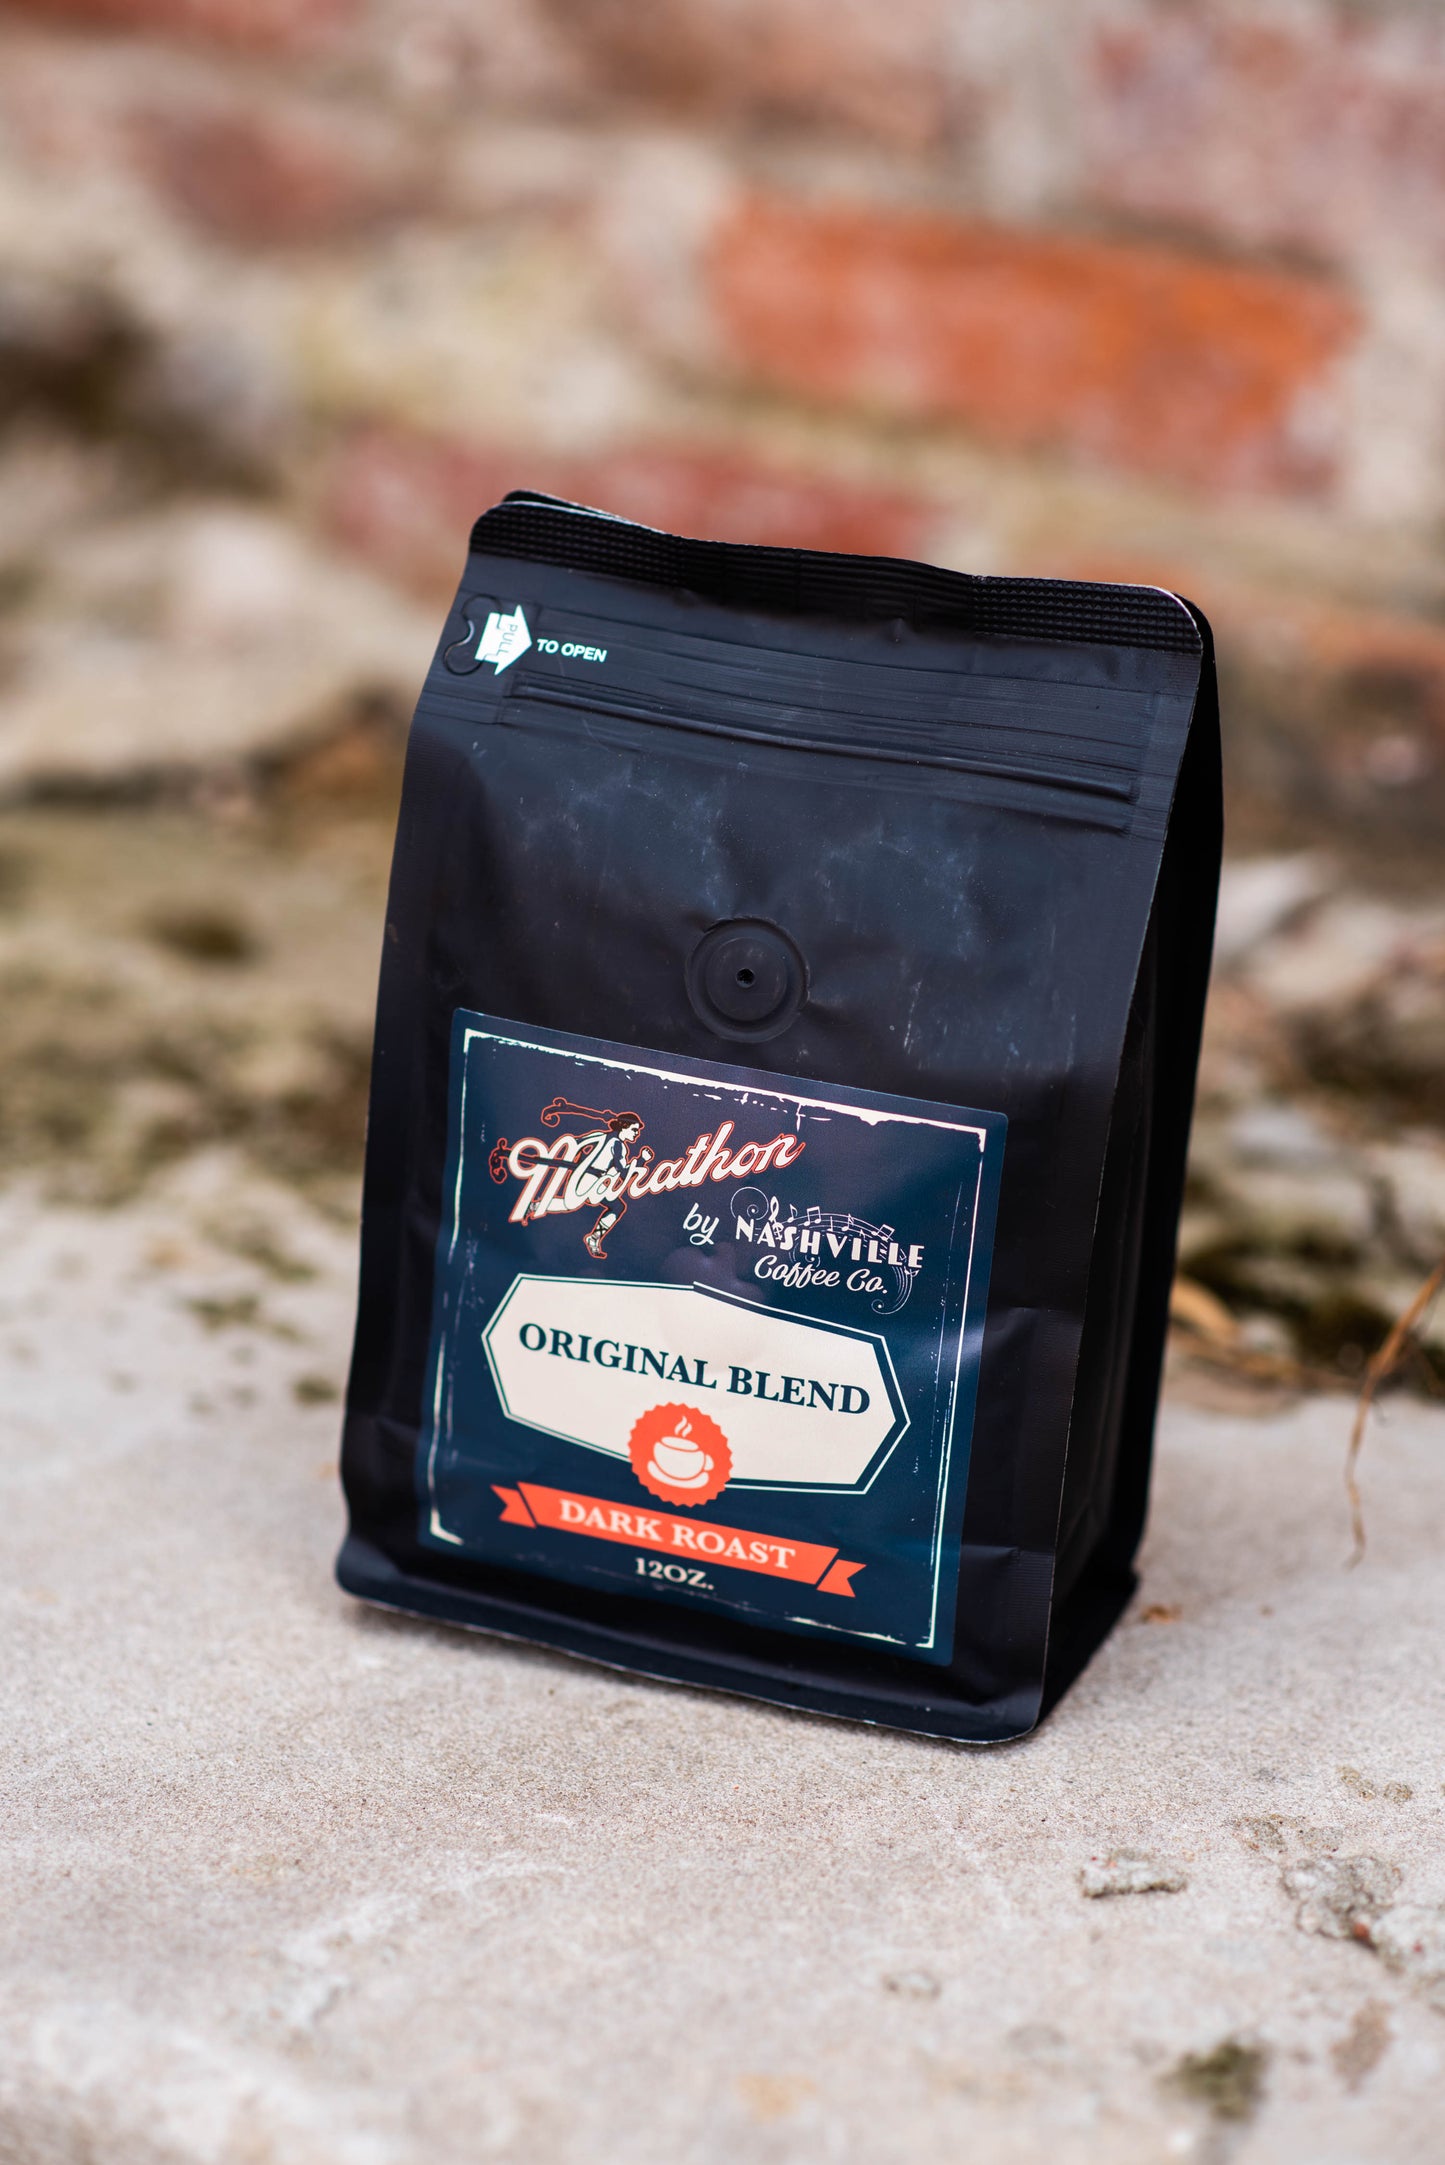 Nashville Coffee Co X Marathon Motorworks “Original Blend Dark Roast” 12oz Whole Bean Bag